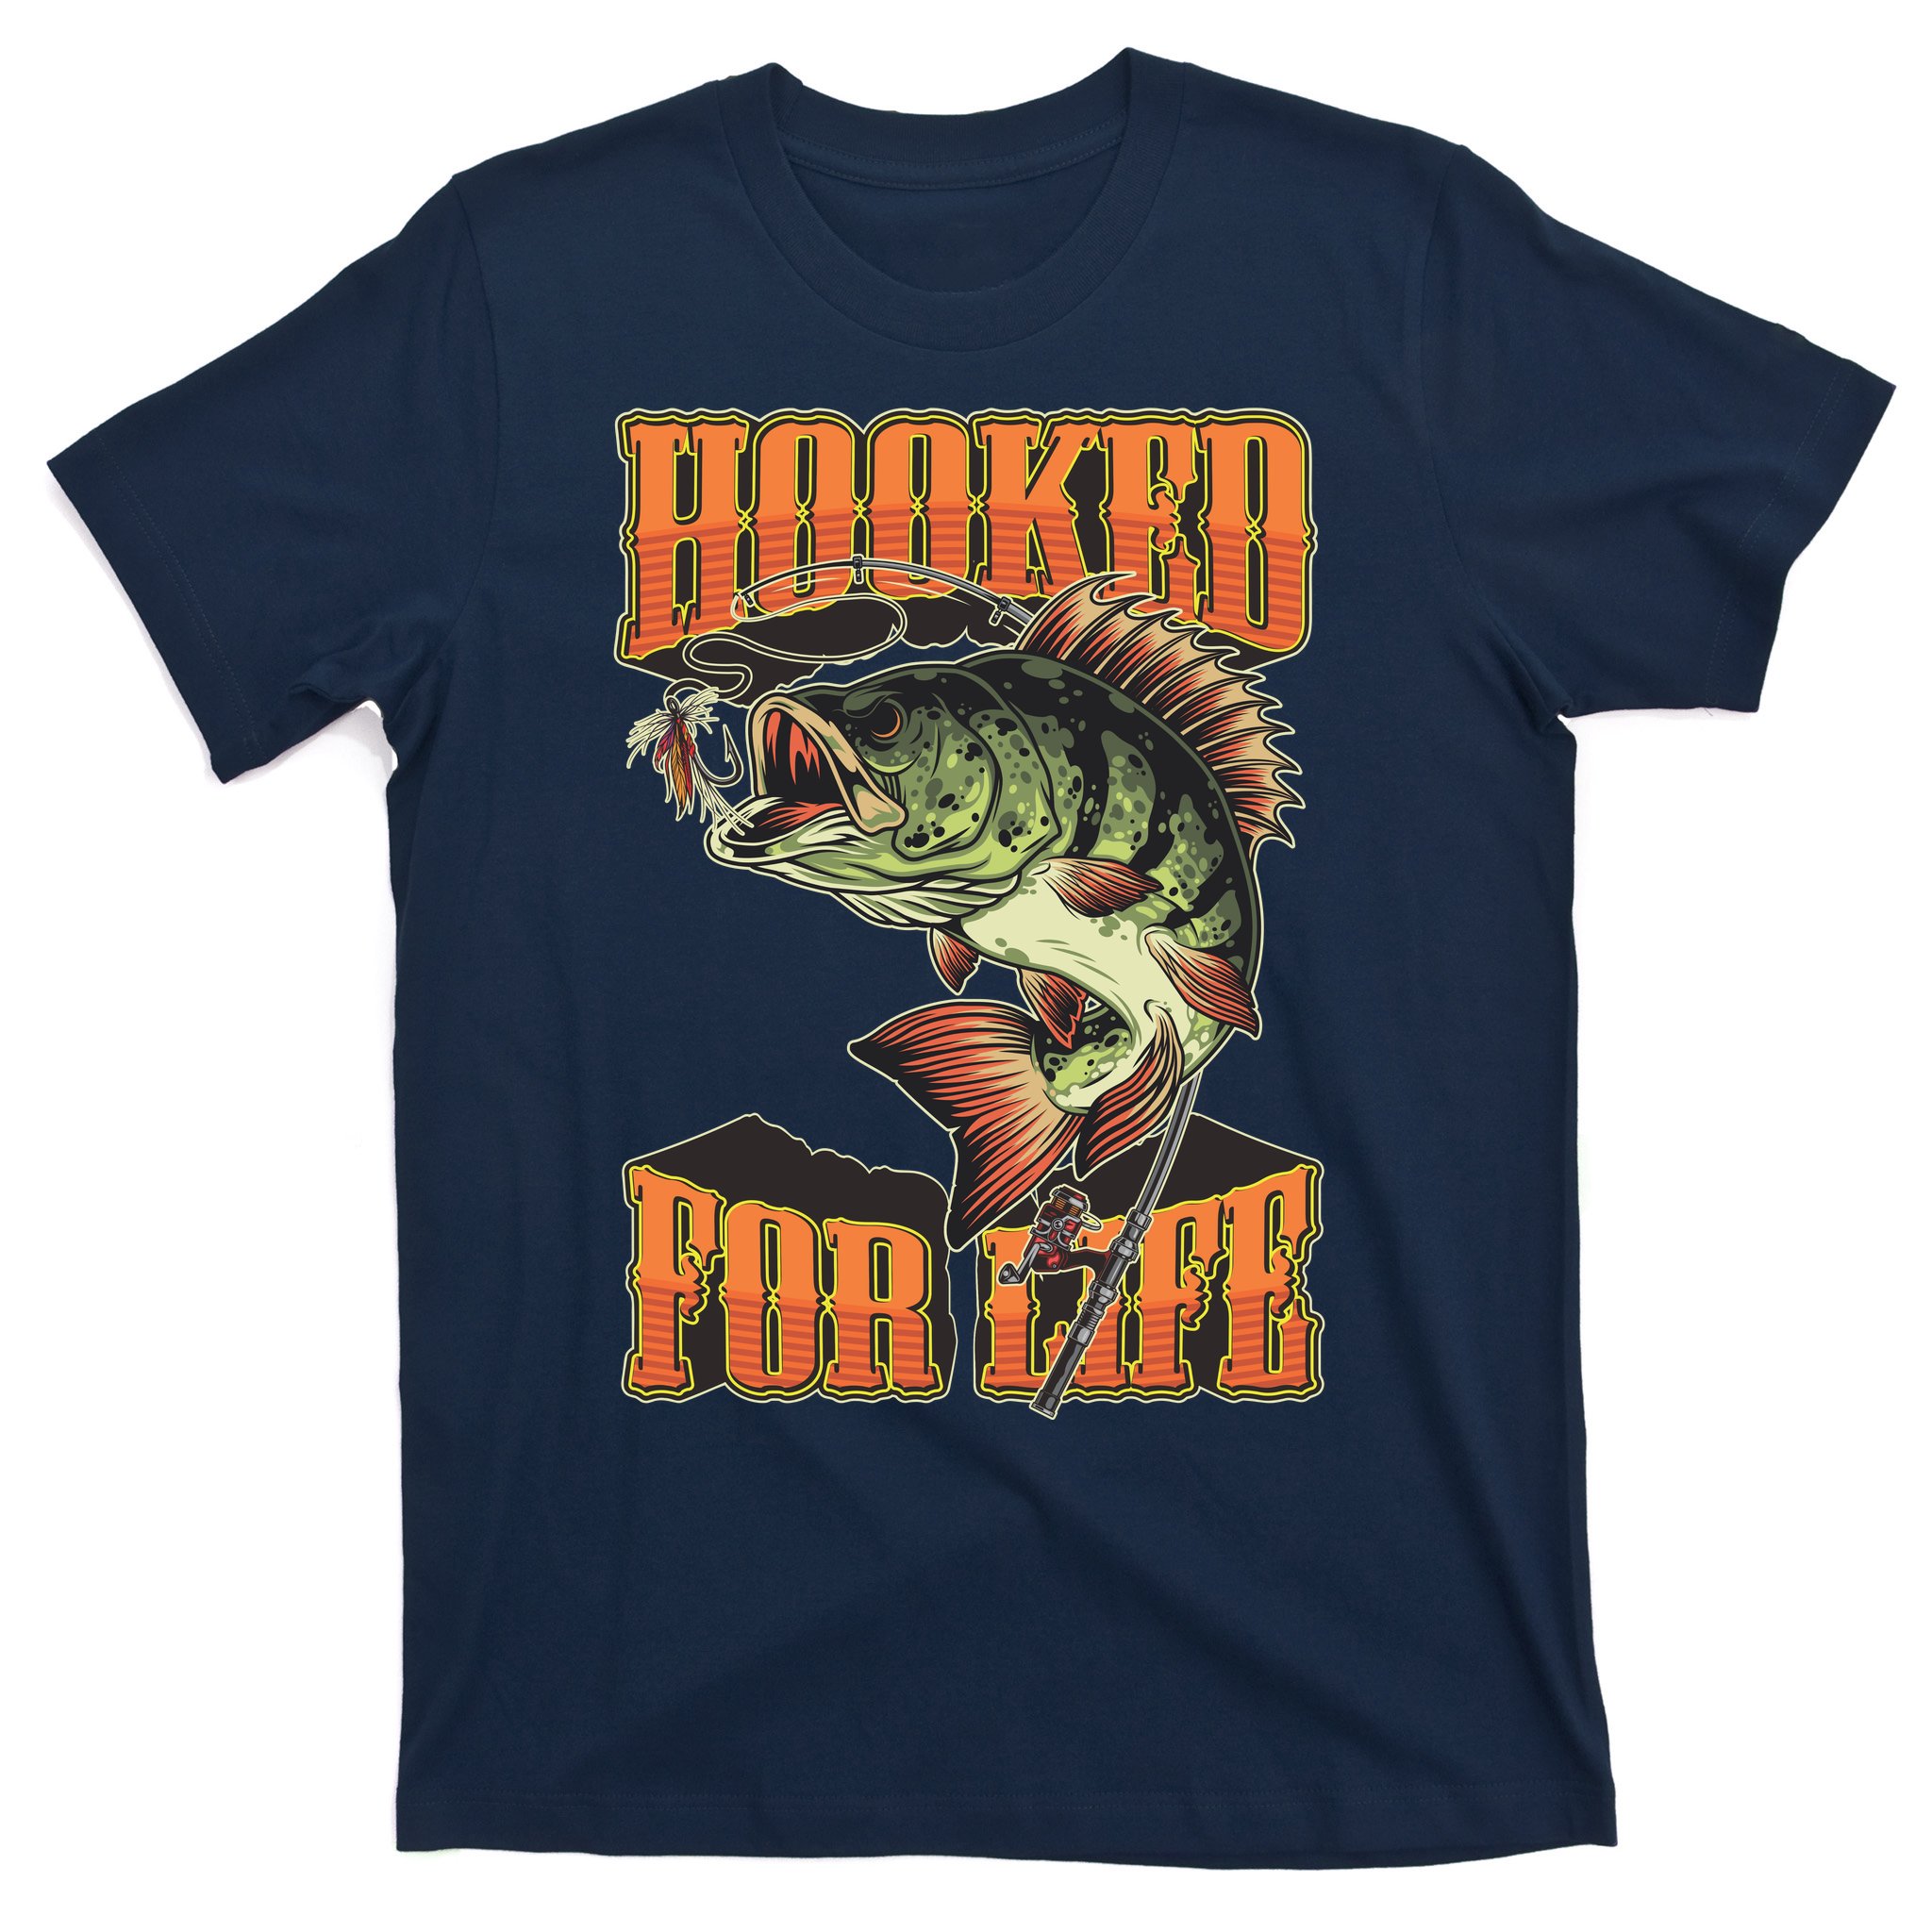 Teeshirtpalace Hooked for Life Funny Fishing Bass Fish Design T-Shirt